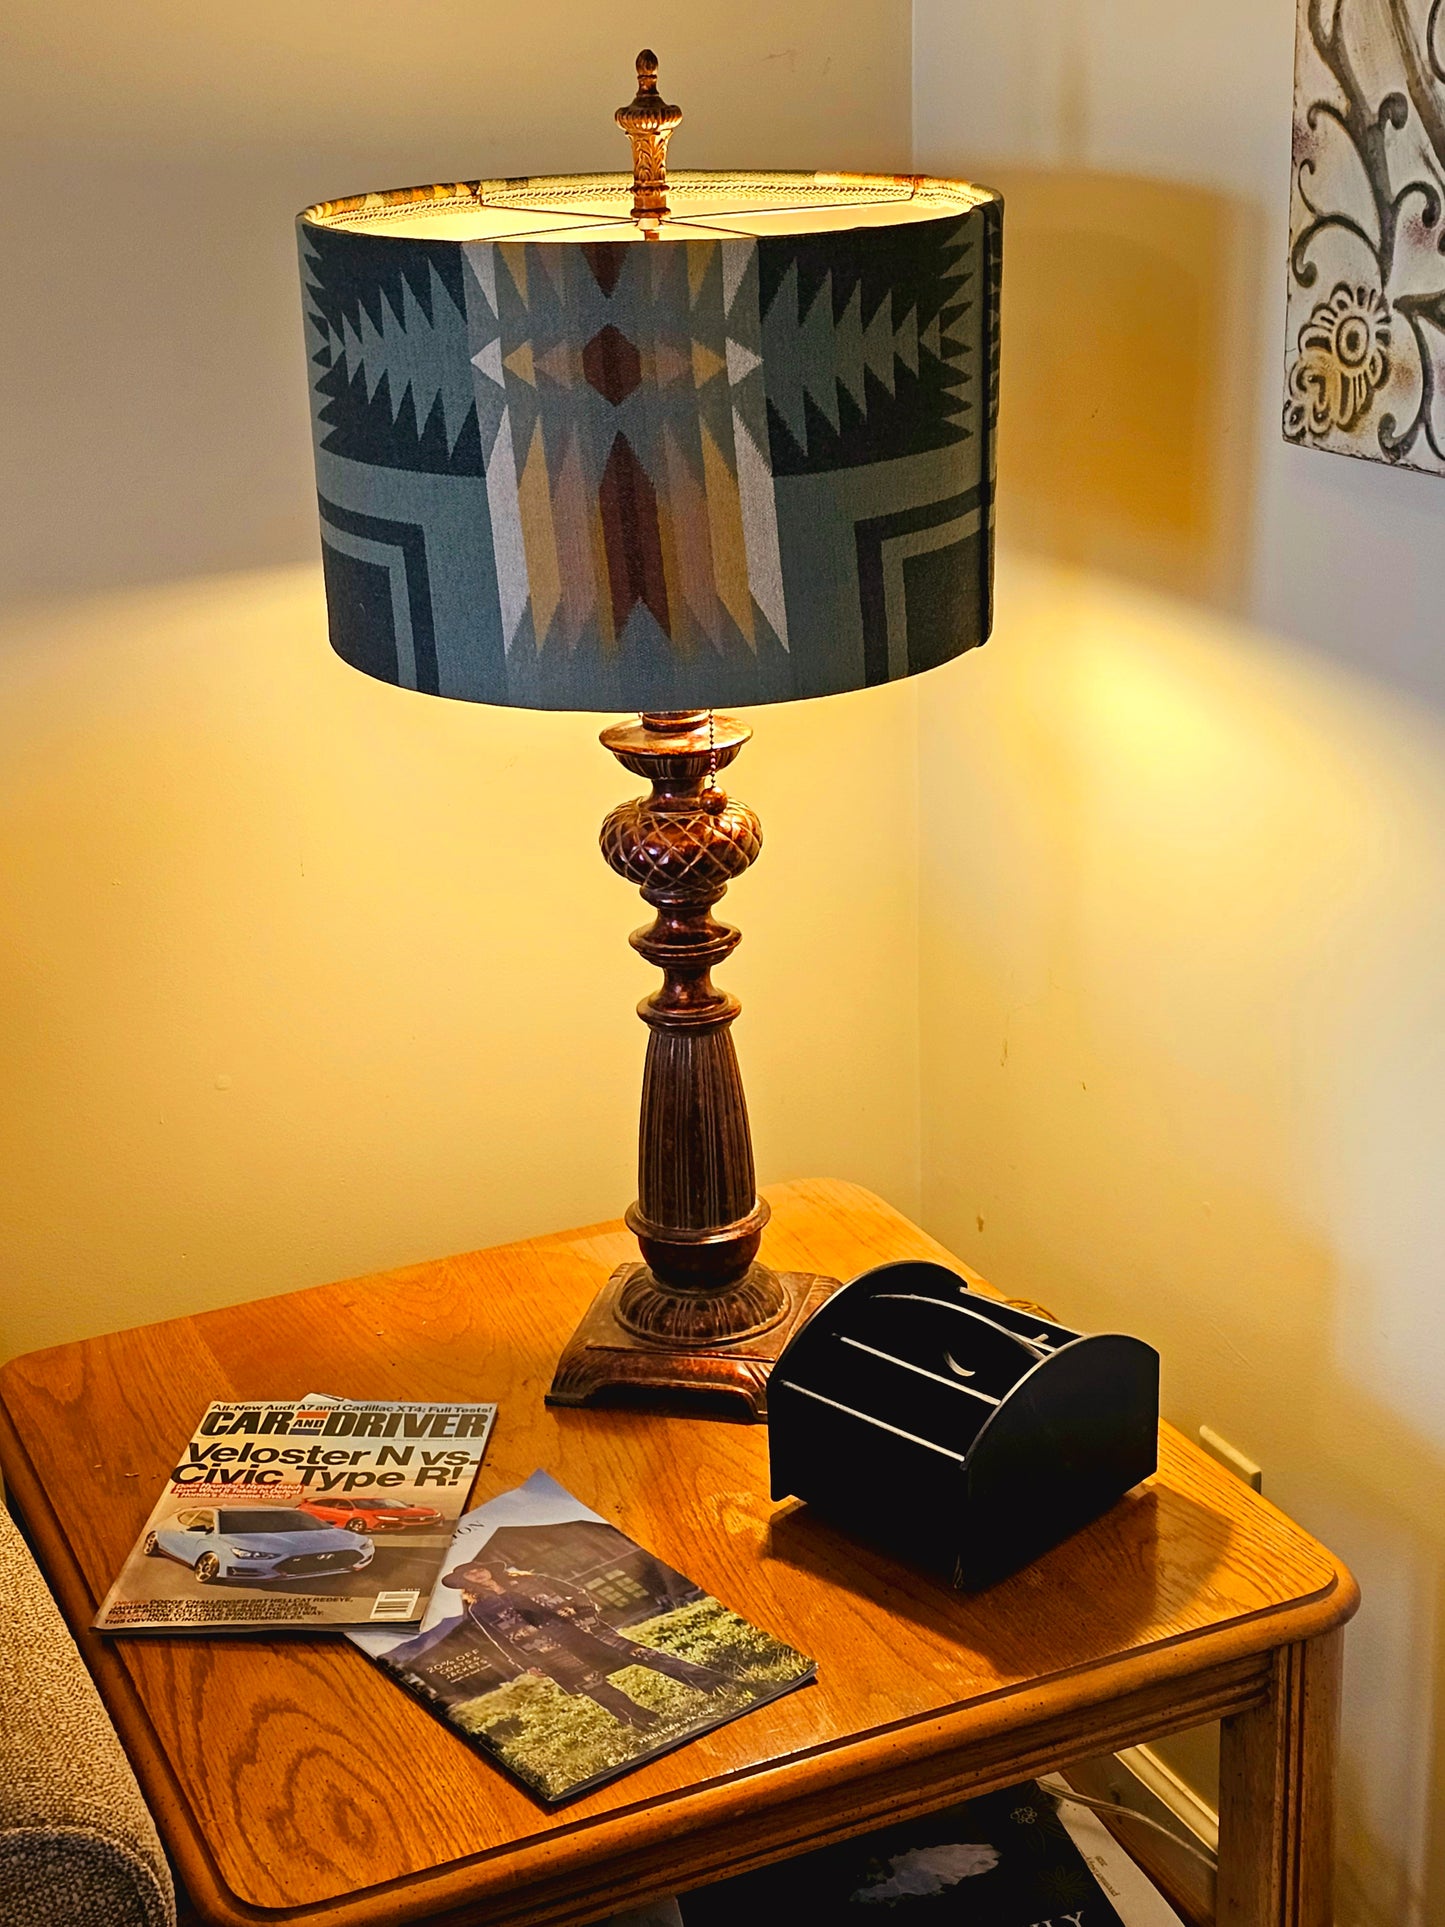 Harding Sage lamp shade w/ Brass lamp base